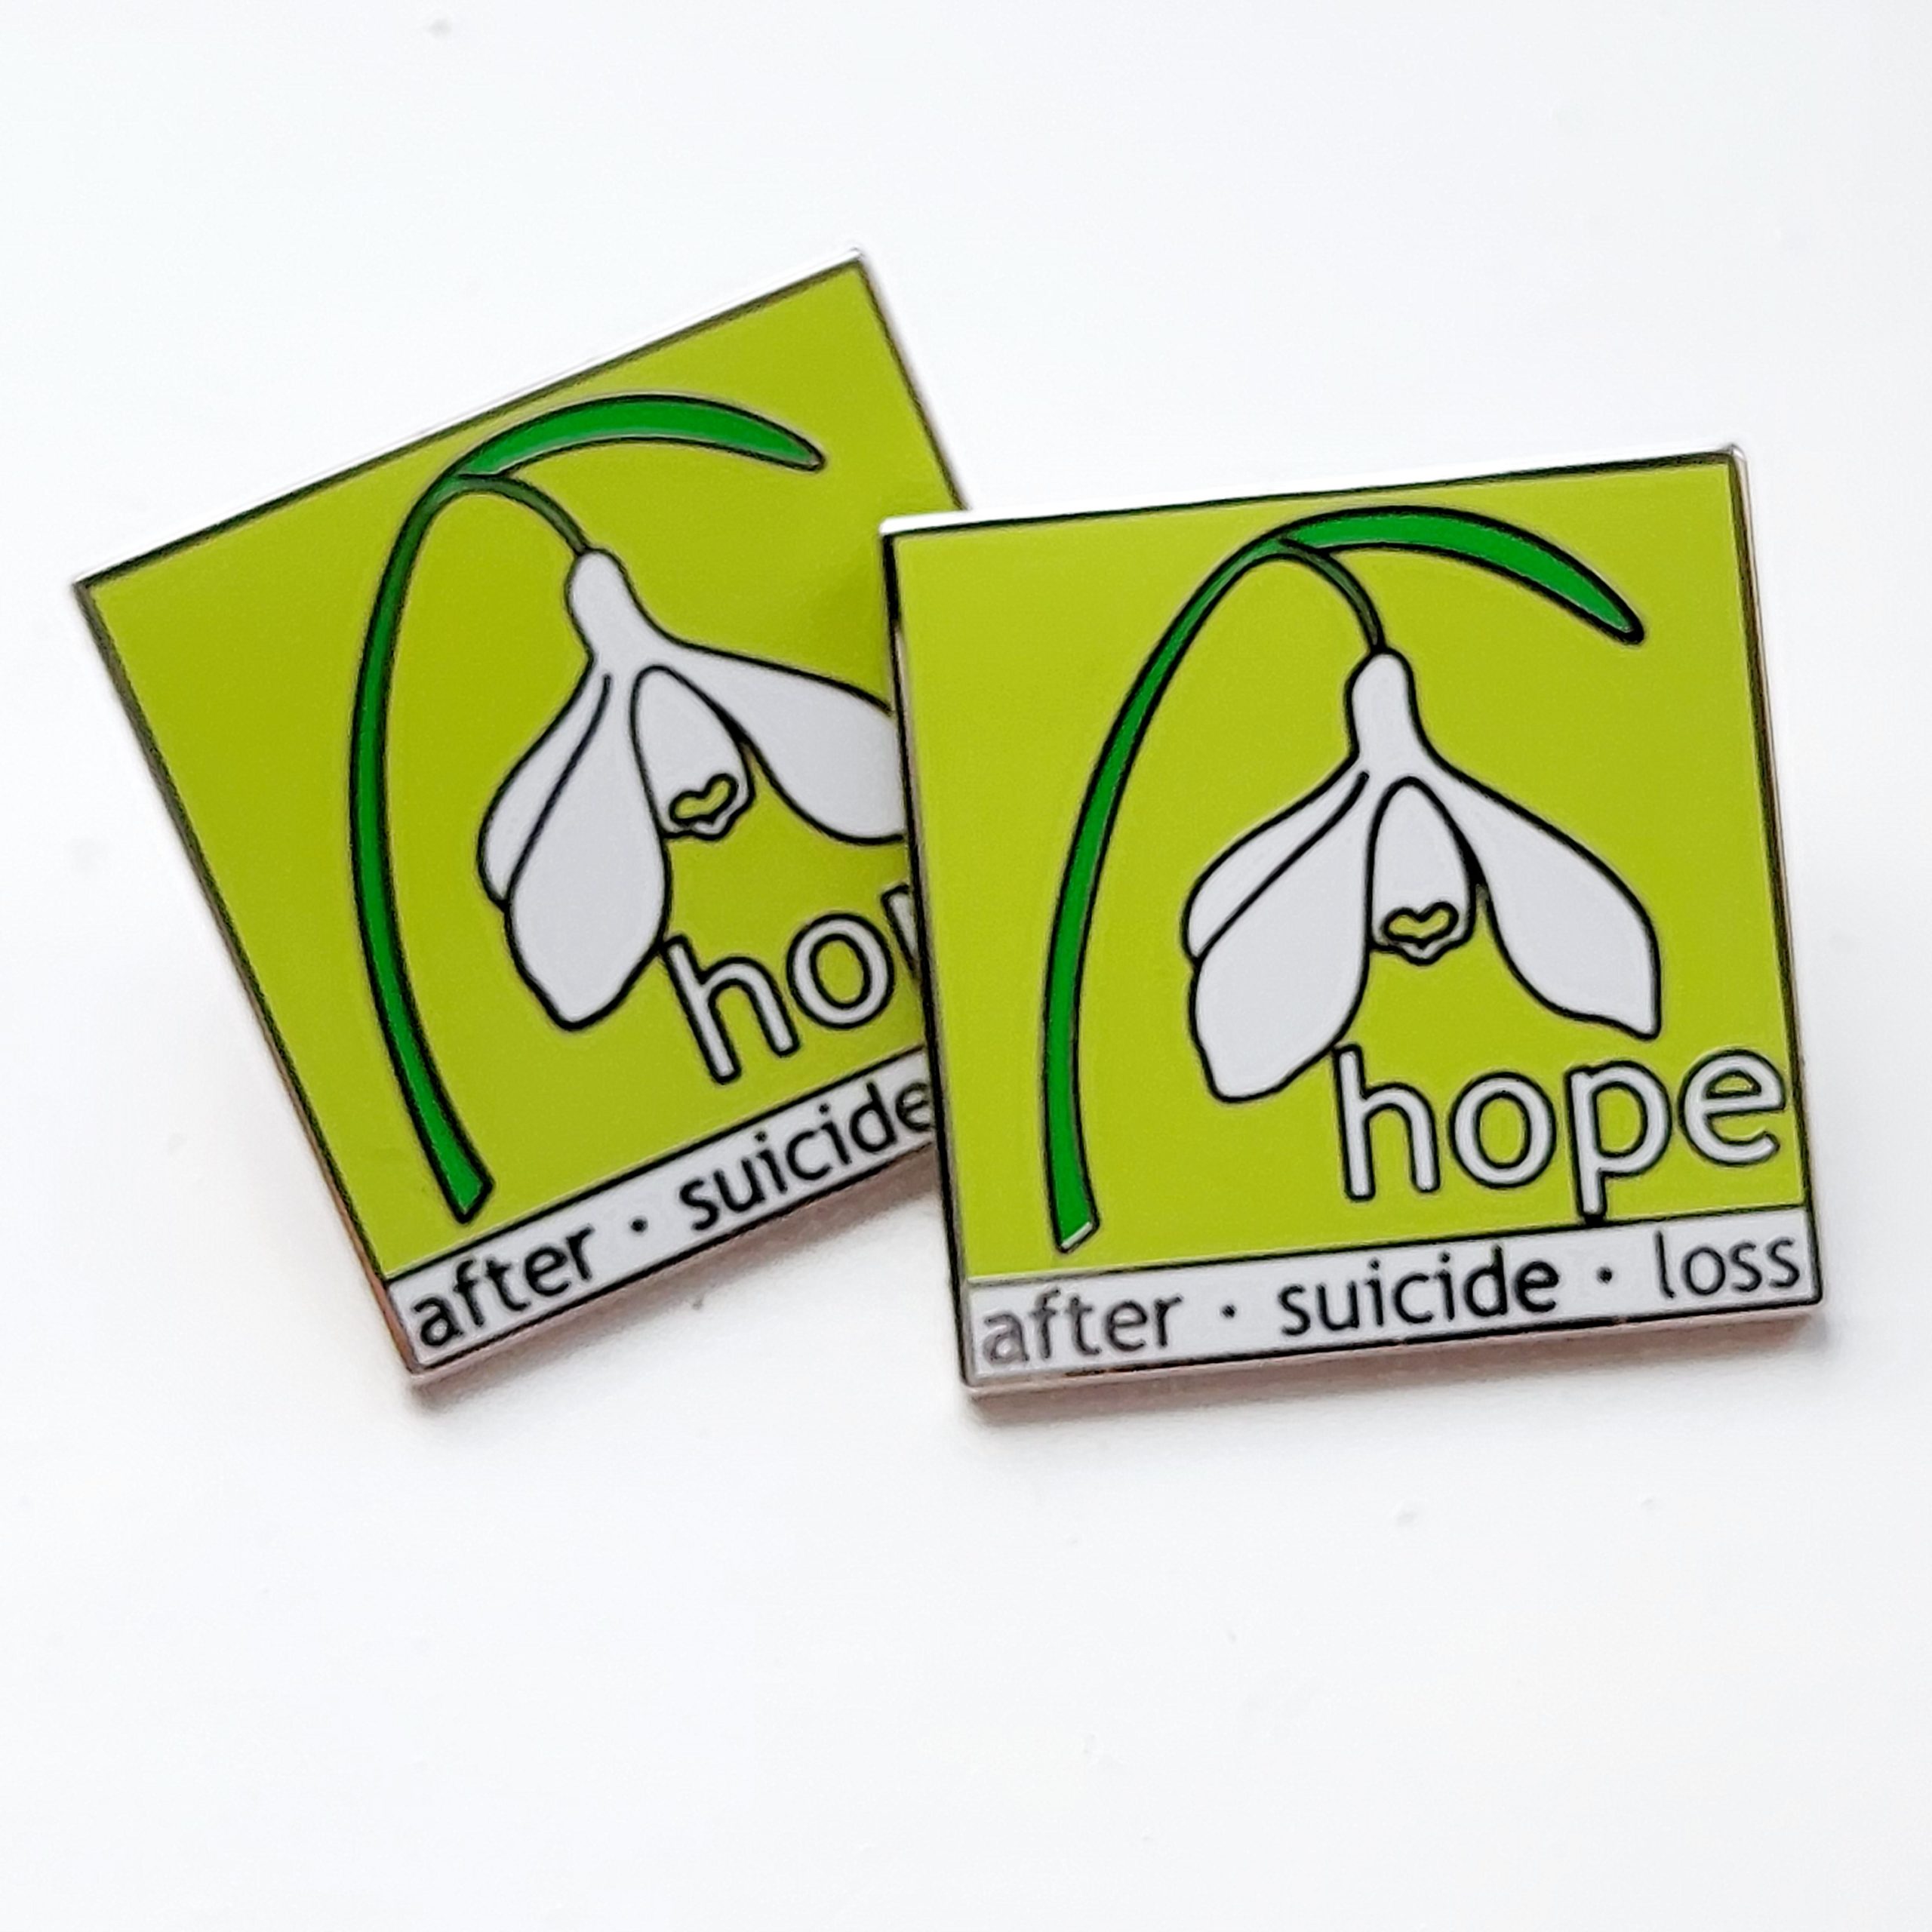 HOPEs enamel pin badges 2 for £5.99(inc p&p)